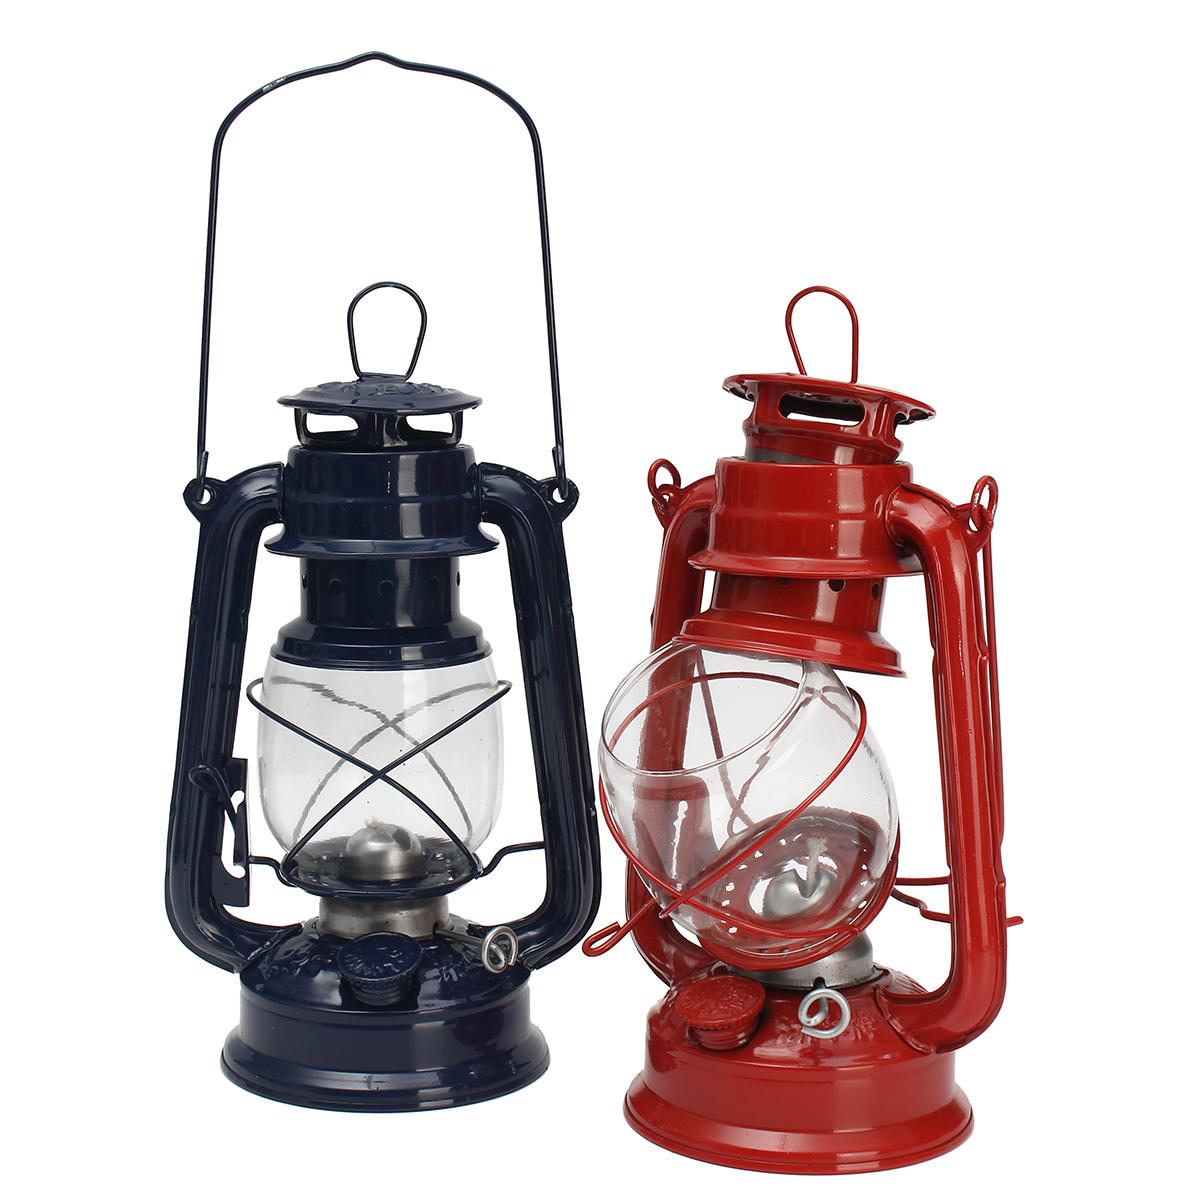 Vintage Oil Lamp Lantern Kerosene Light Camping Outdoor Lantern With Cover 